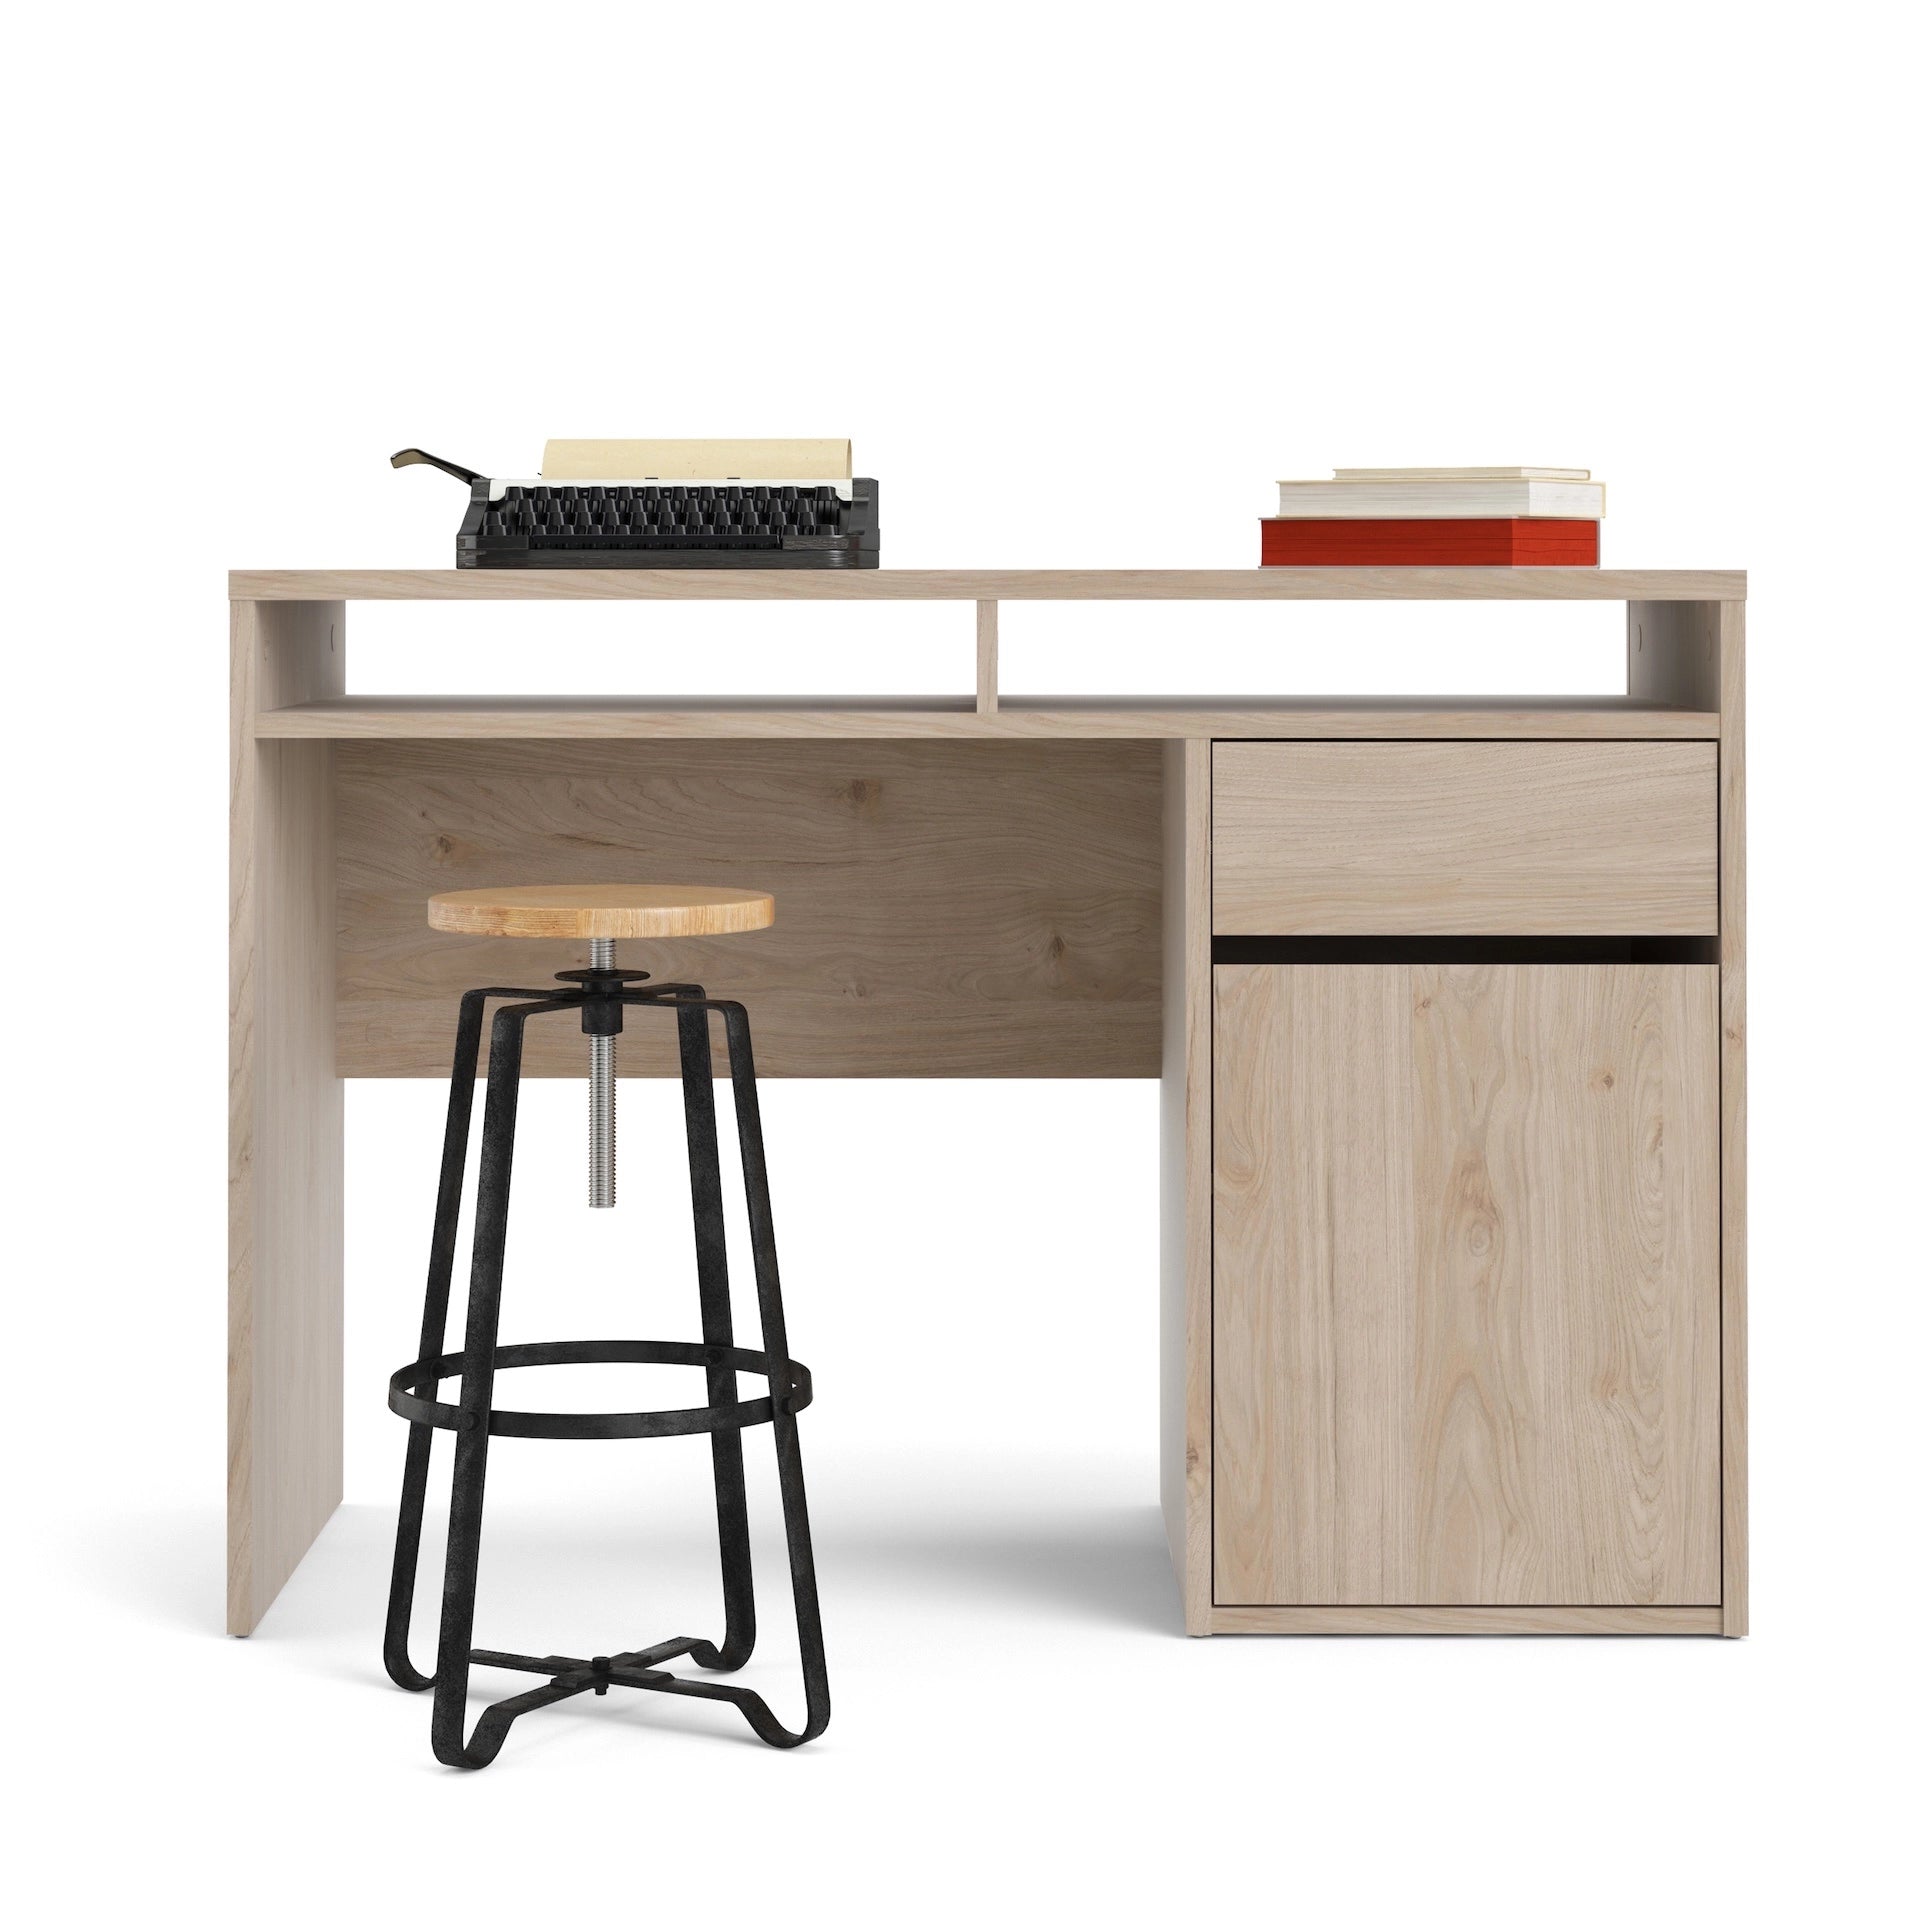 Furniture To Go Function Plus Desk 1 Door 1 Drawer in Jackson Hickory Oak